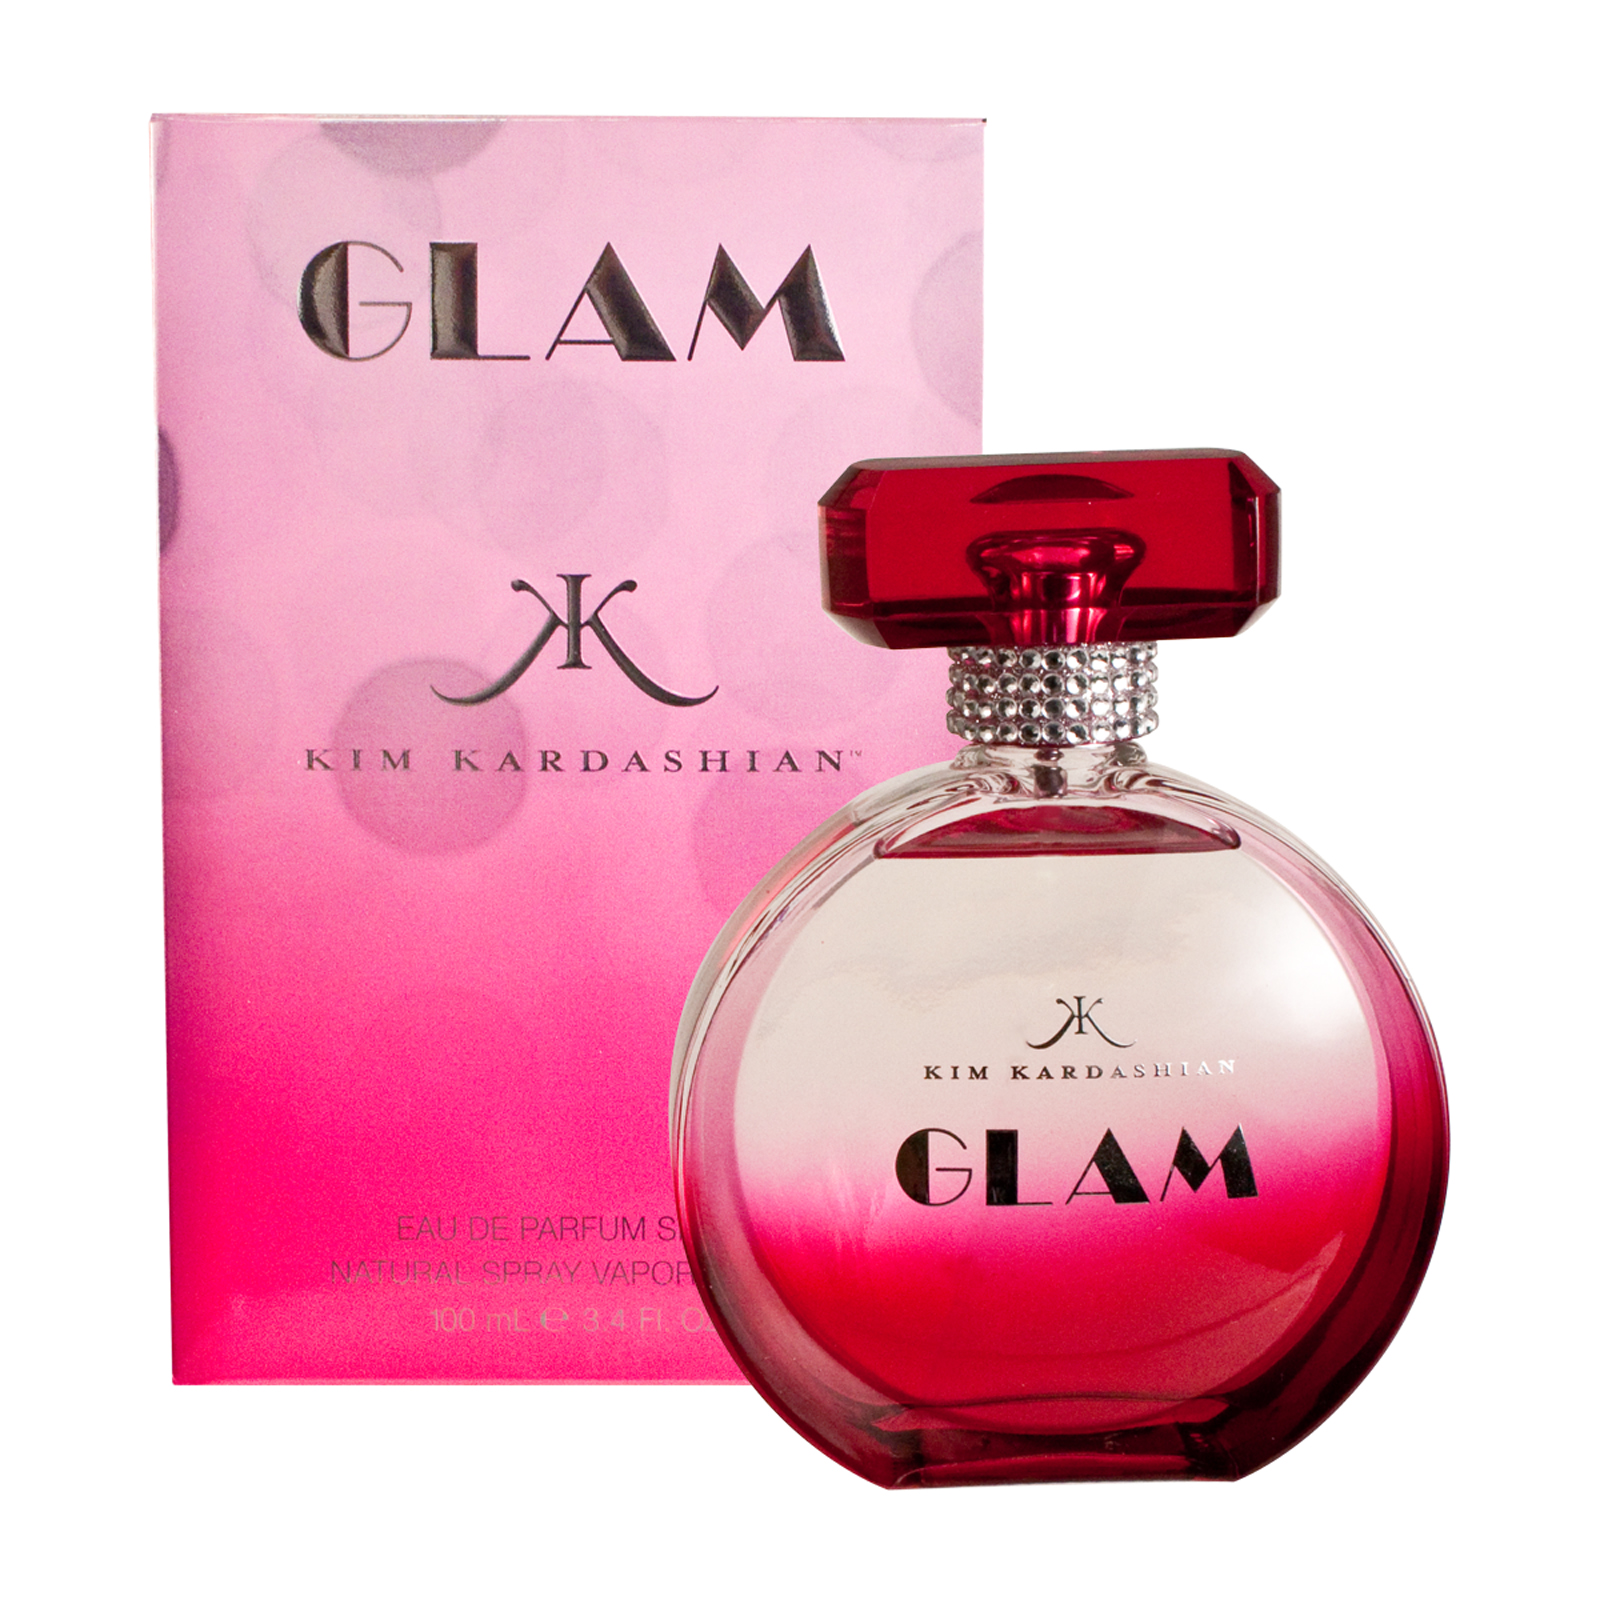 KIM KARDASHIAN GLAM For Women 3.4 oz Eau de Parfum Spray By Kim Kardashian